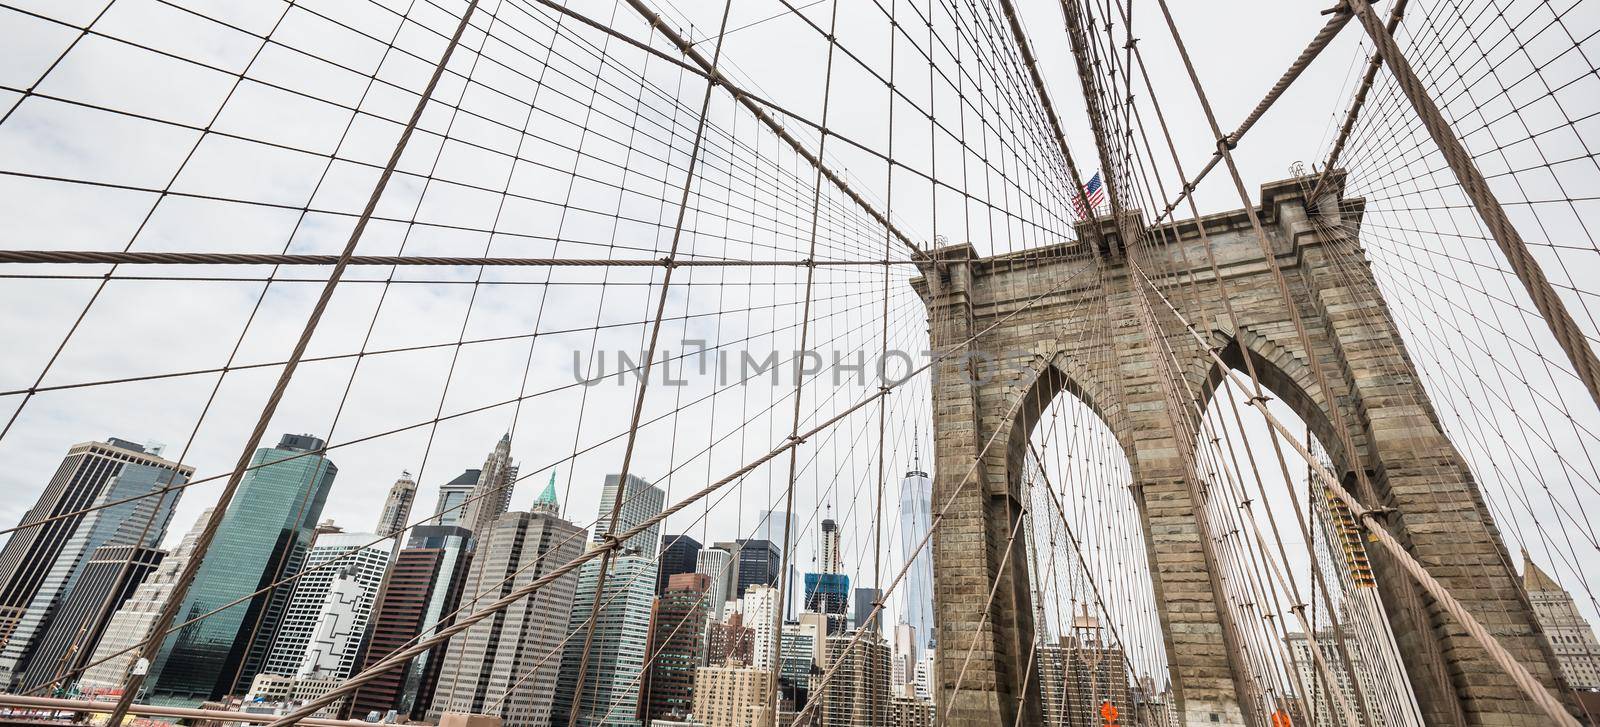 Brooklyn Bridge in New York by palinchak